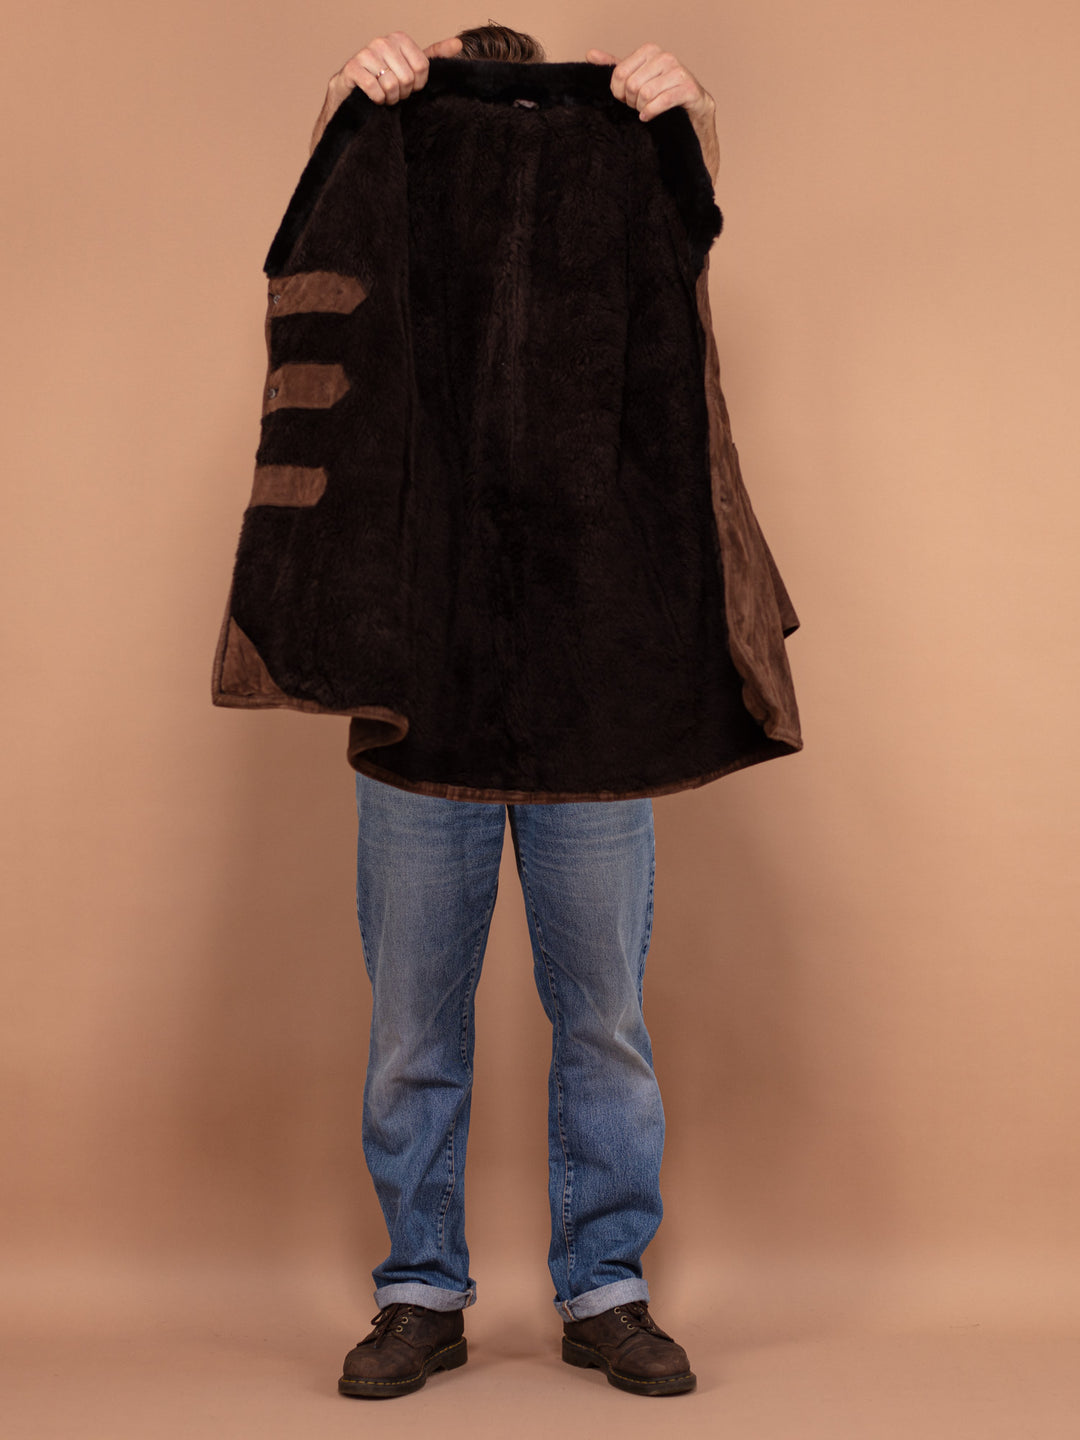 Sherpa Lined Suede Coat, 70's Vintage Men's Suede Coat Small S Size, Boho Men Coat, Warm Wool Coat, Old Fashioned Mens Overcoat. Western